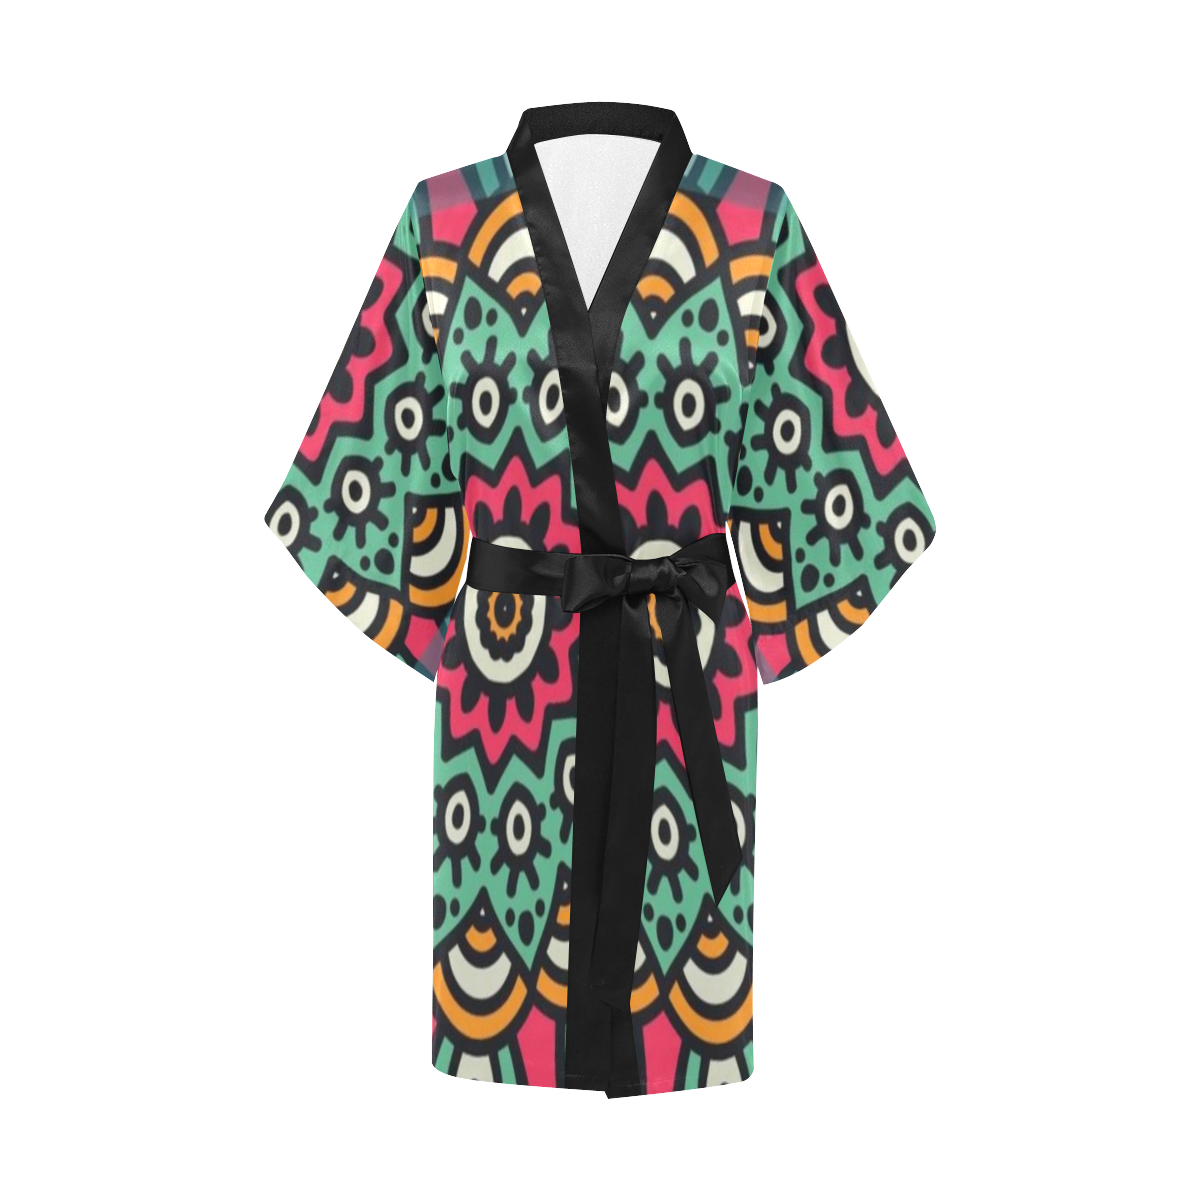 LIFE OF GOD MANDALAS Kimono Robe